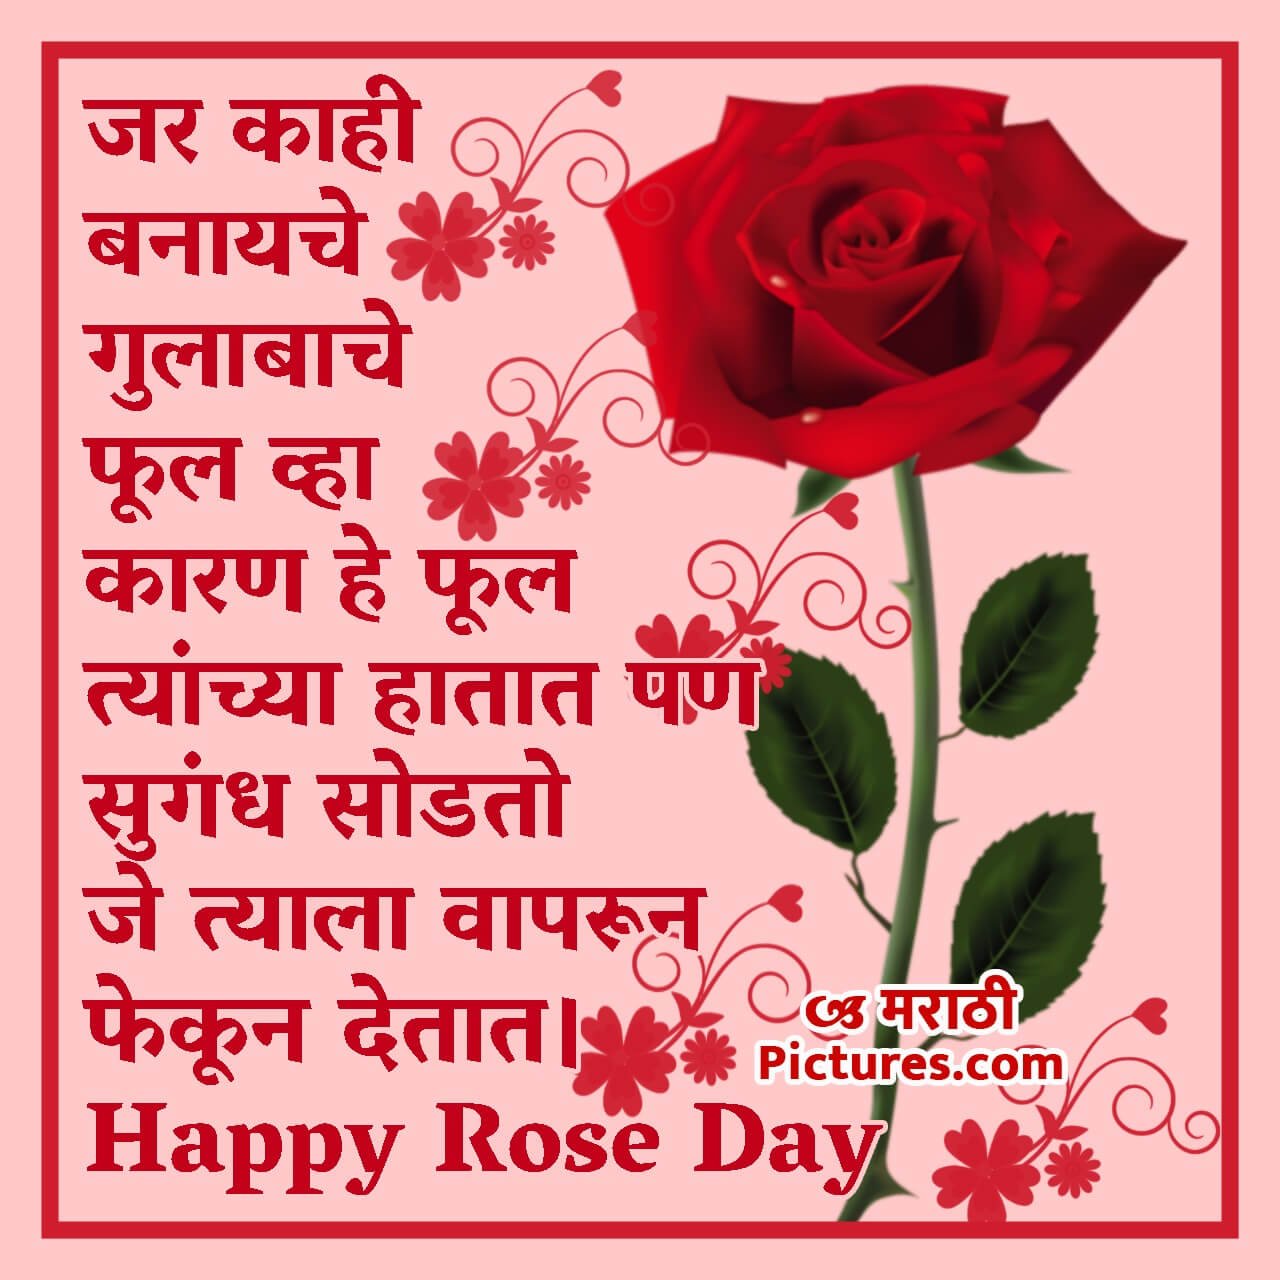 Happy Rose Day Prernadayak Shayari - MarathiPictures.com